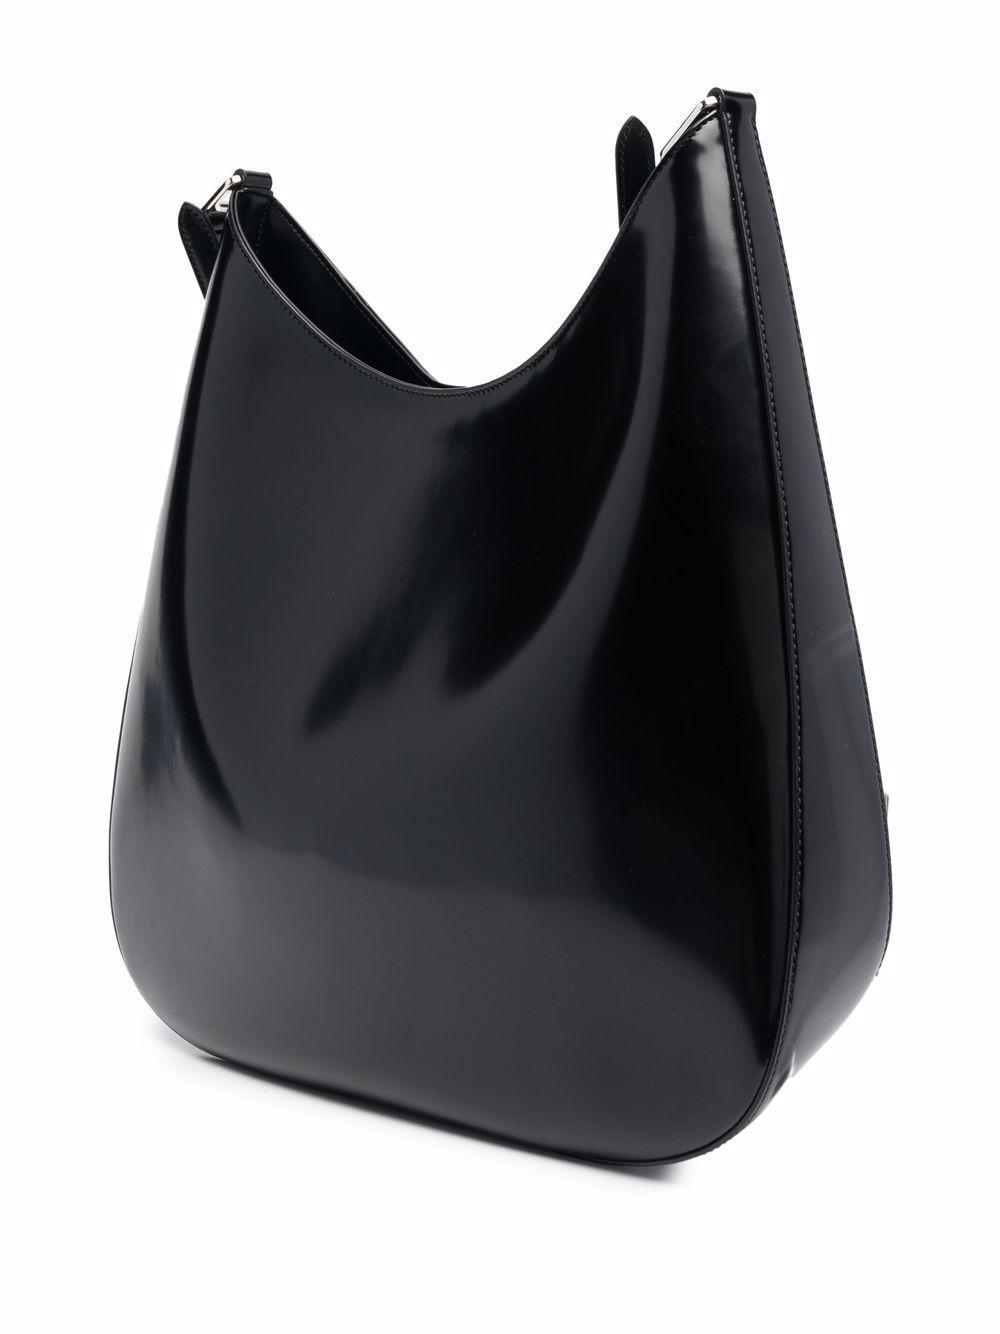 Prada Black leather Cleo bag